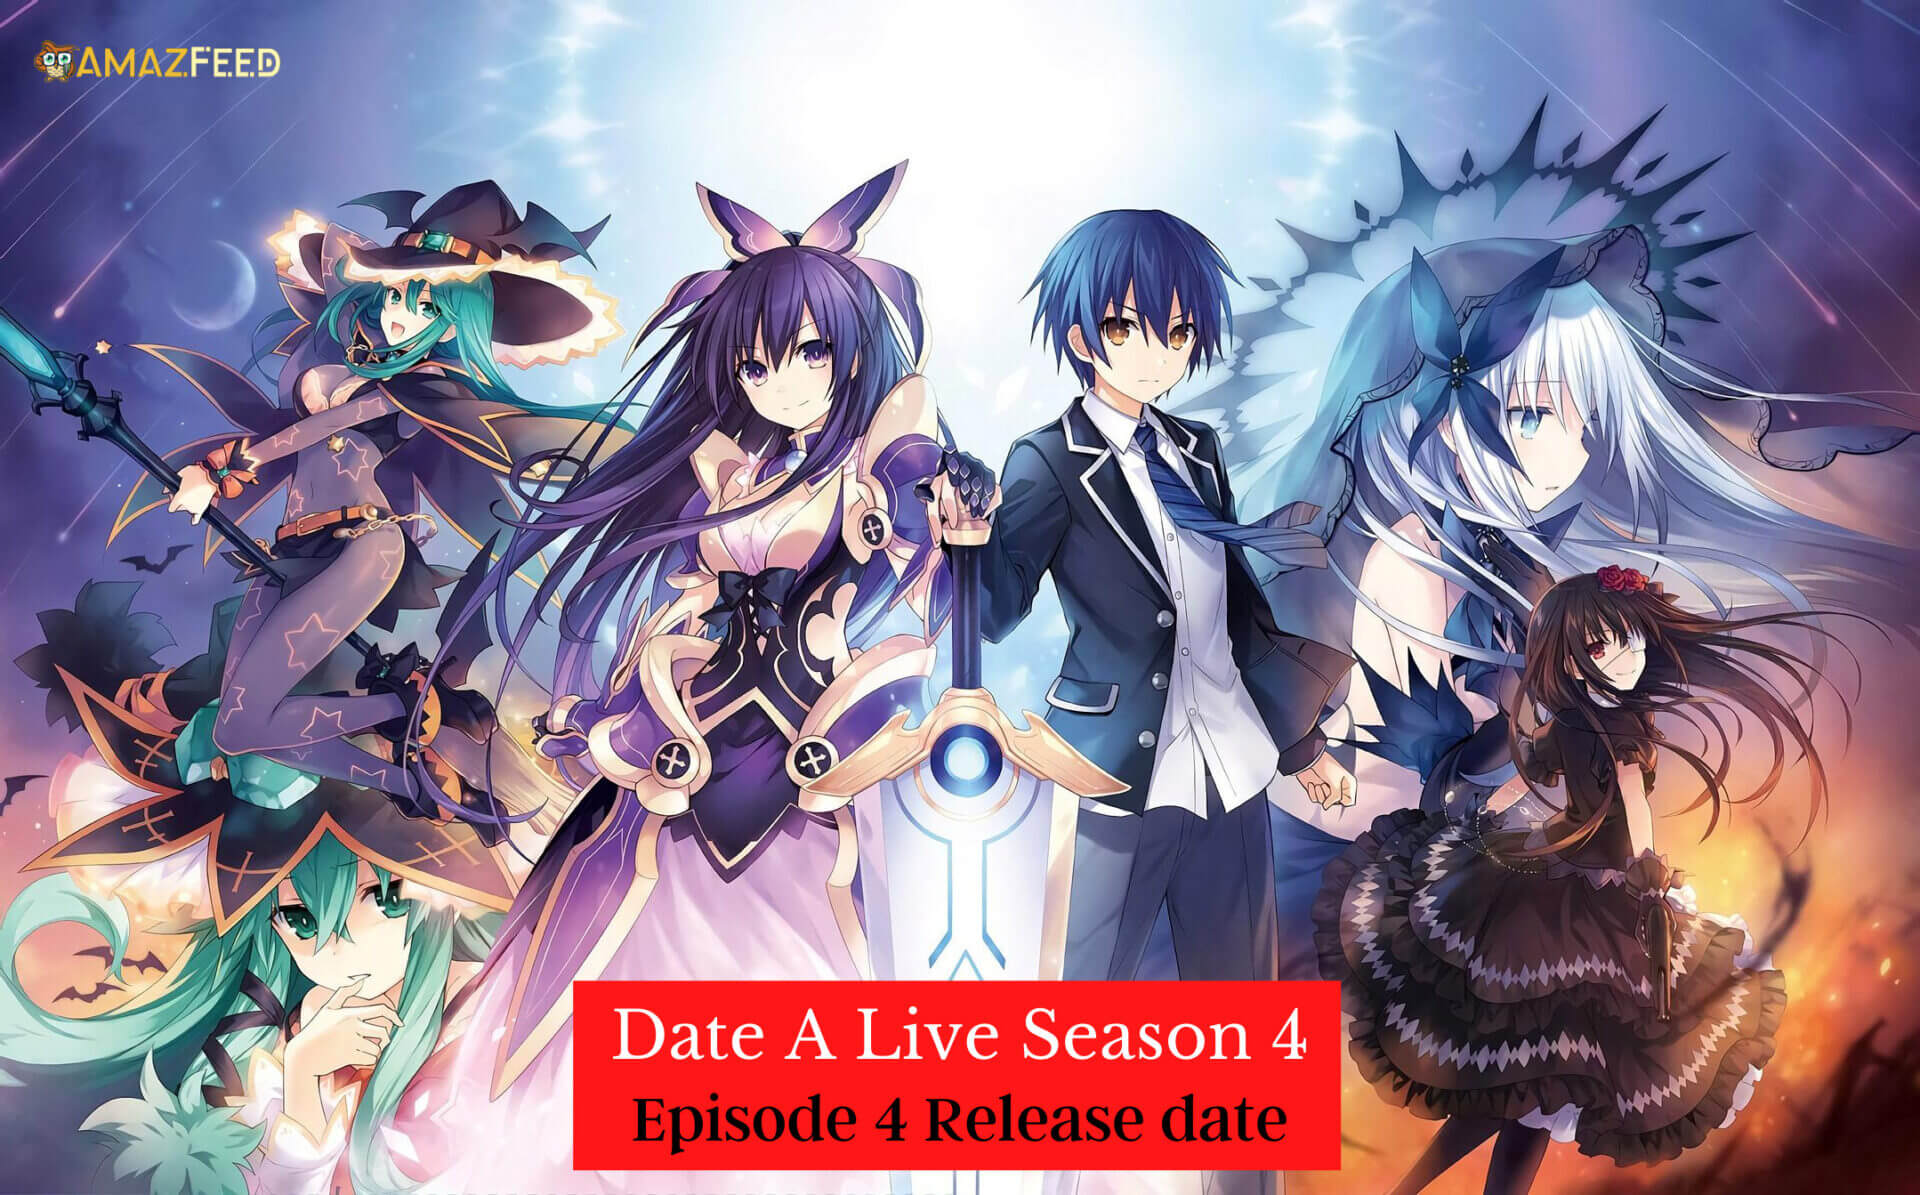 Date A Live Season 4 episode 4 release date